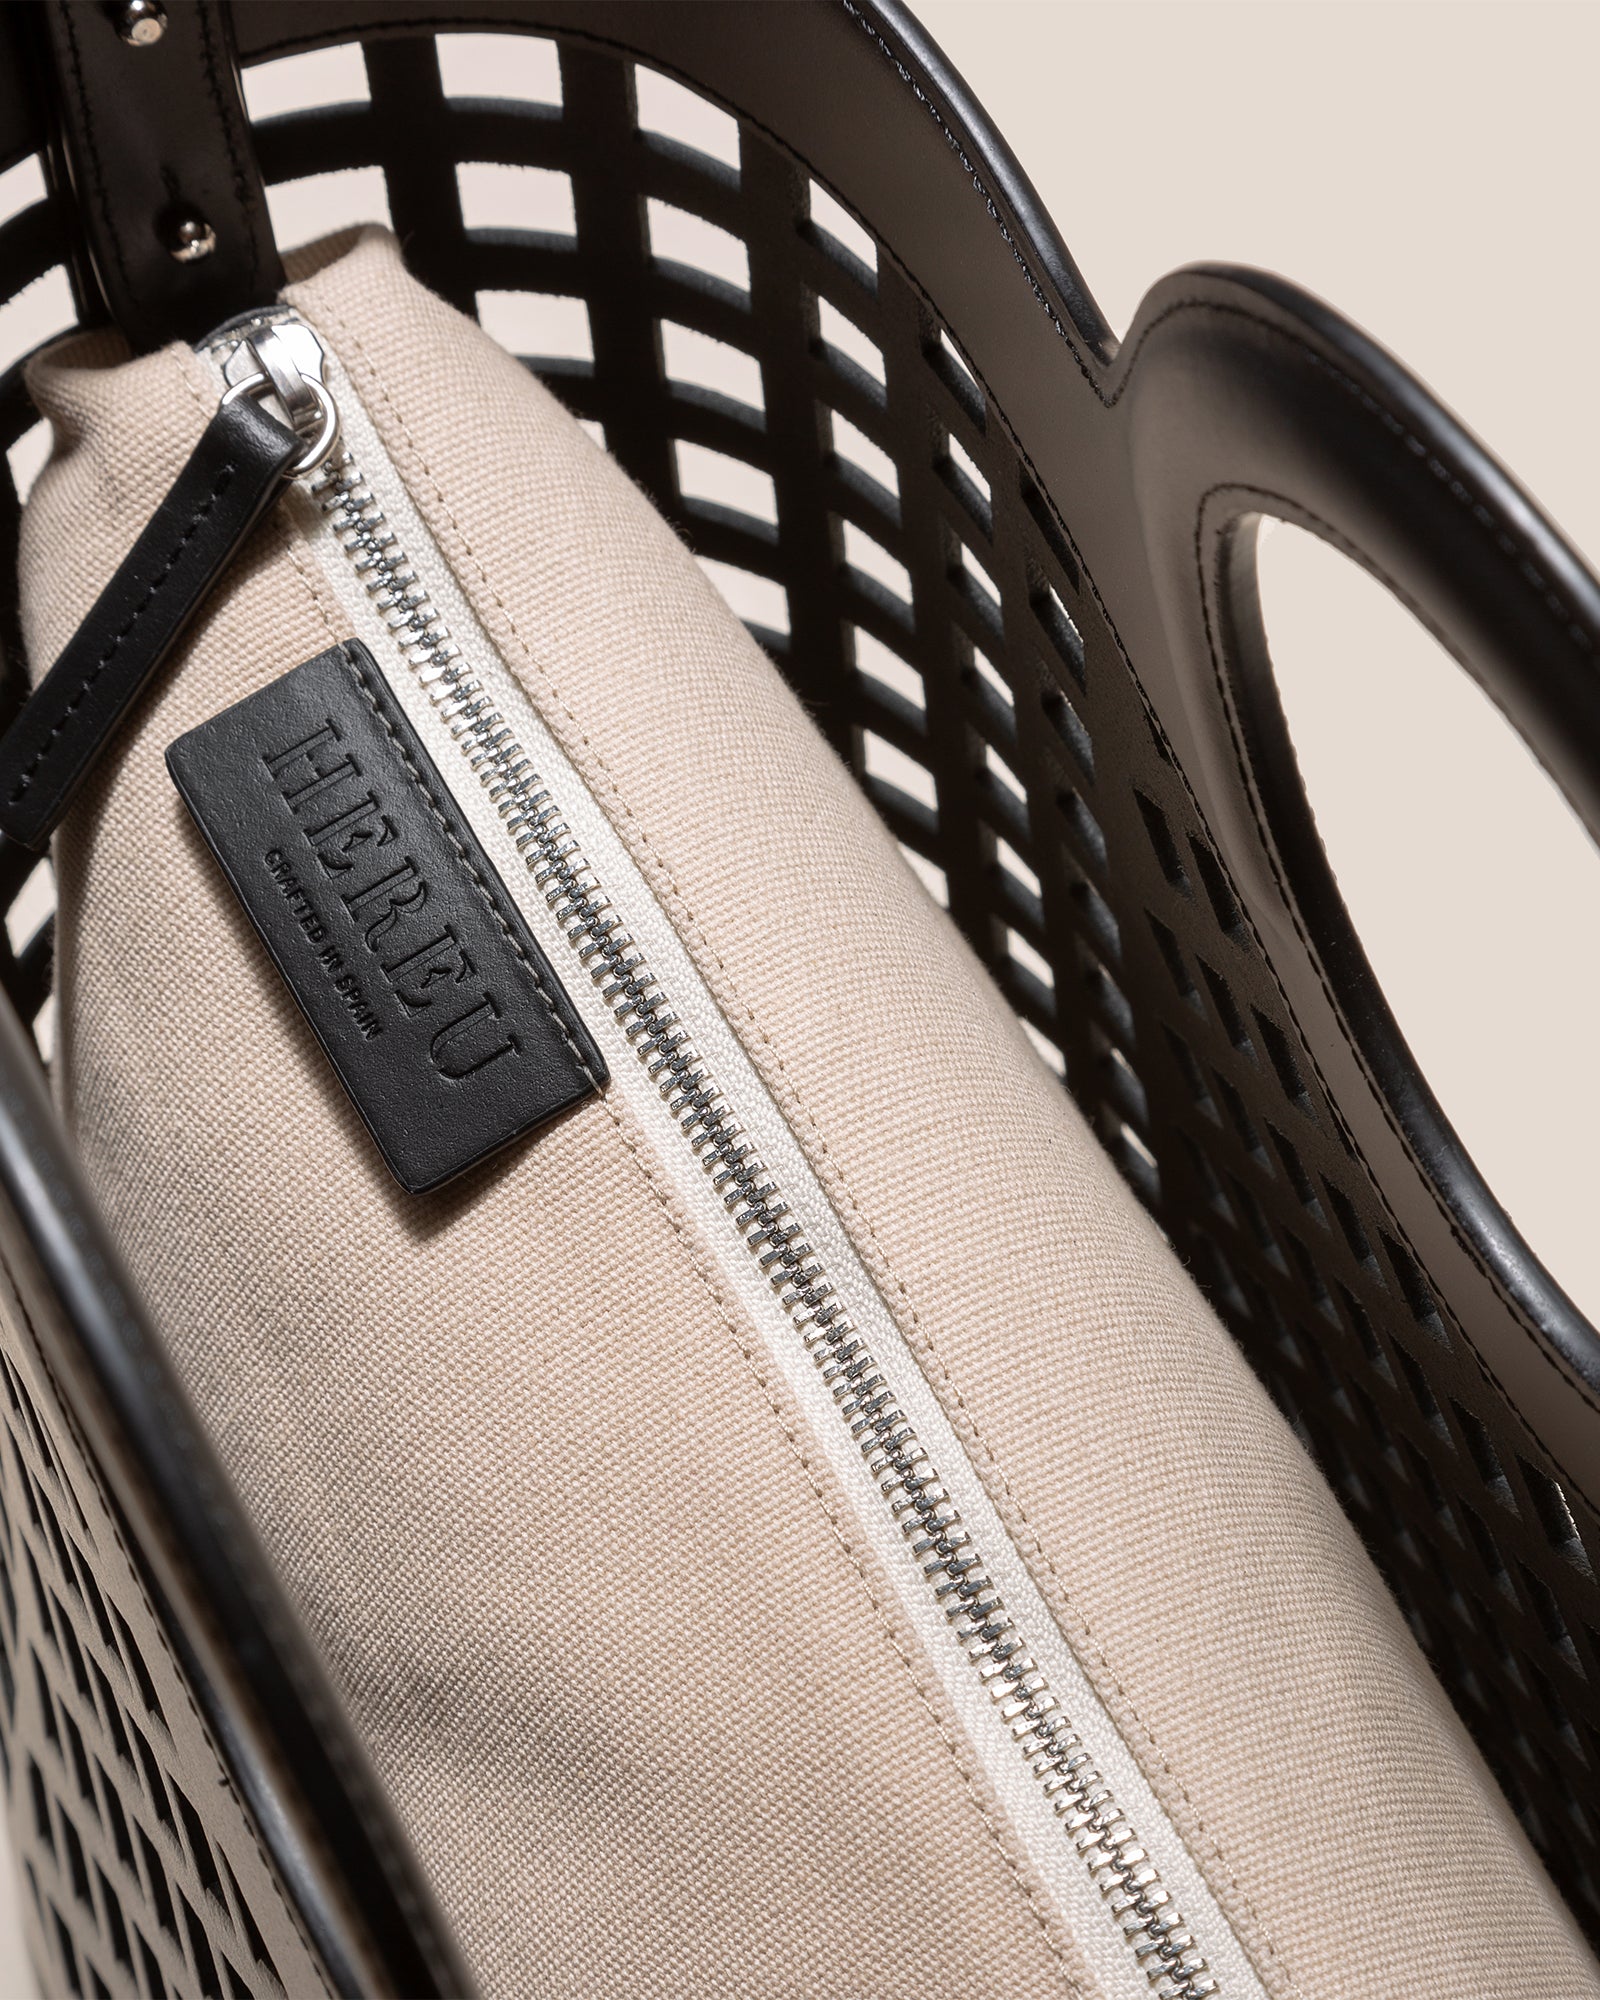 Fendi Cut-out Logo Leather Shopper Bag Release